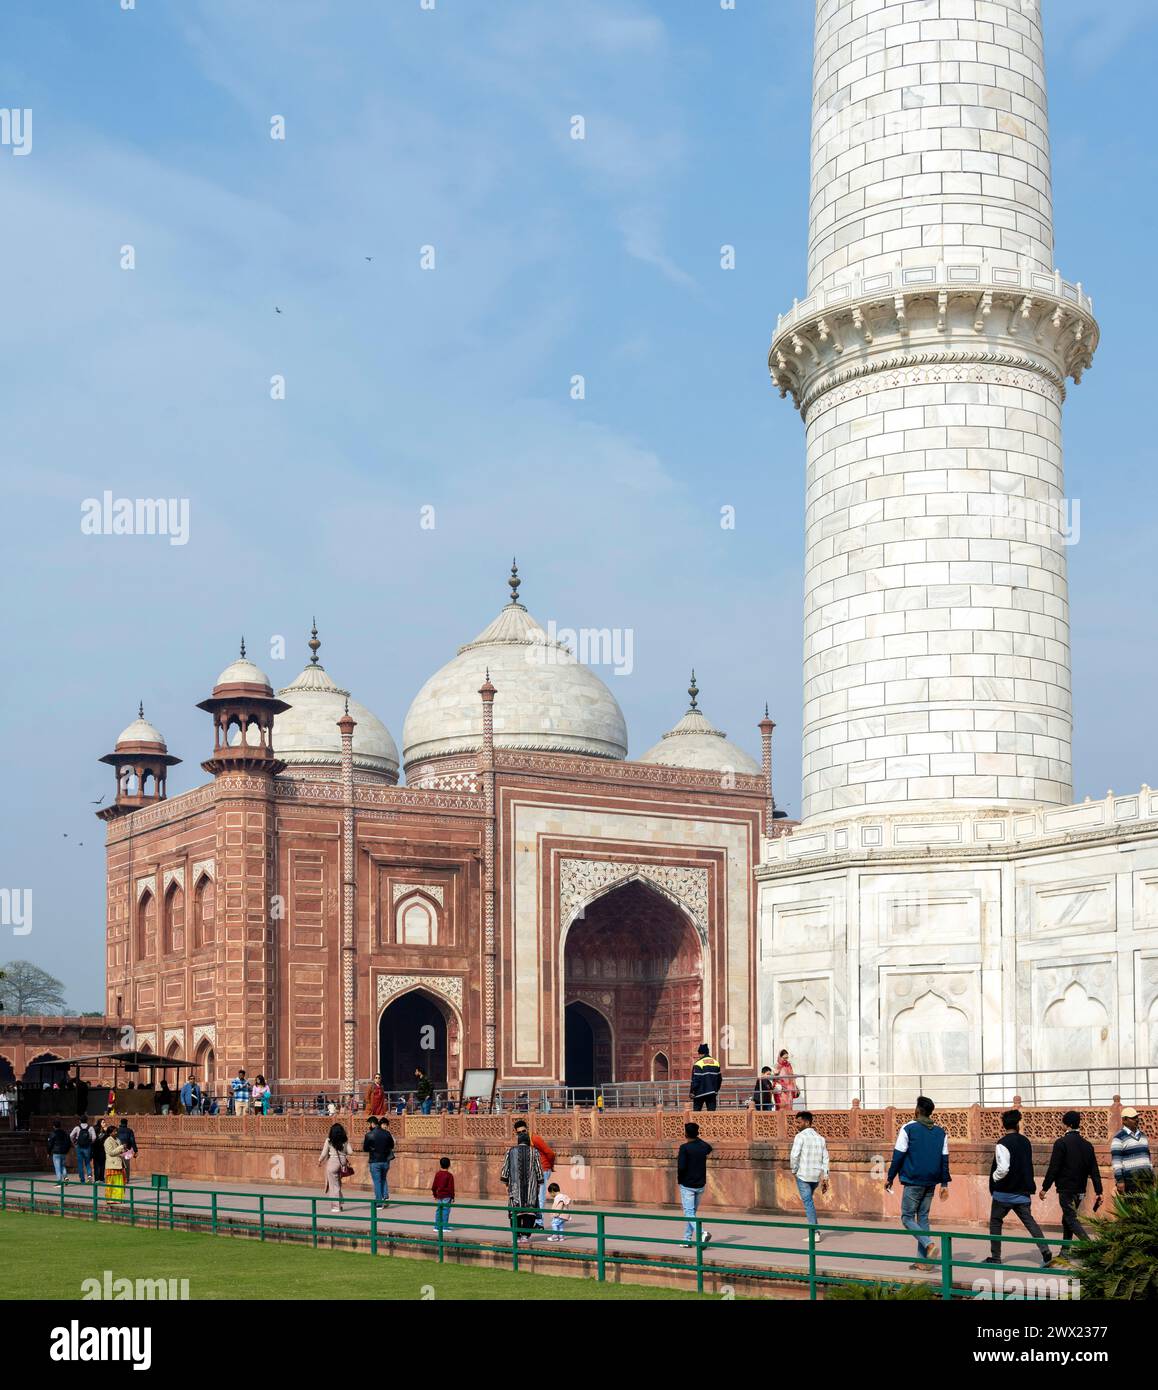 Indien, Agra, Minarett des Taj Mahal, Links die Jawab Moschee Banque D'Images